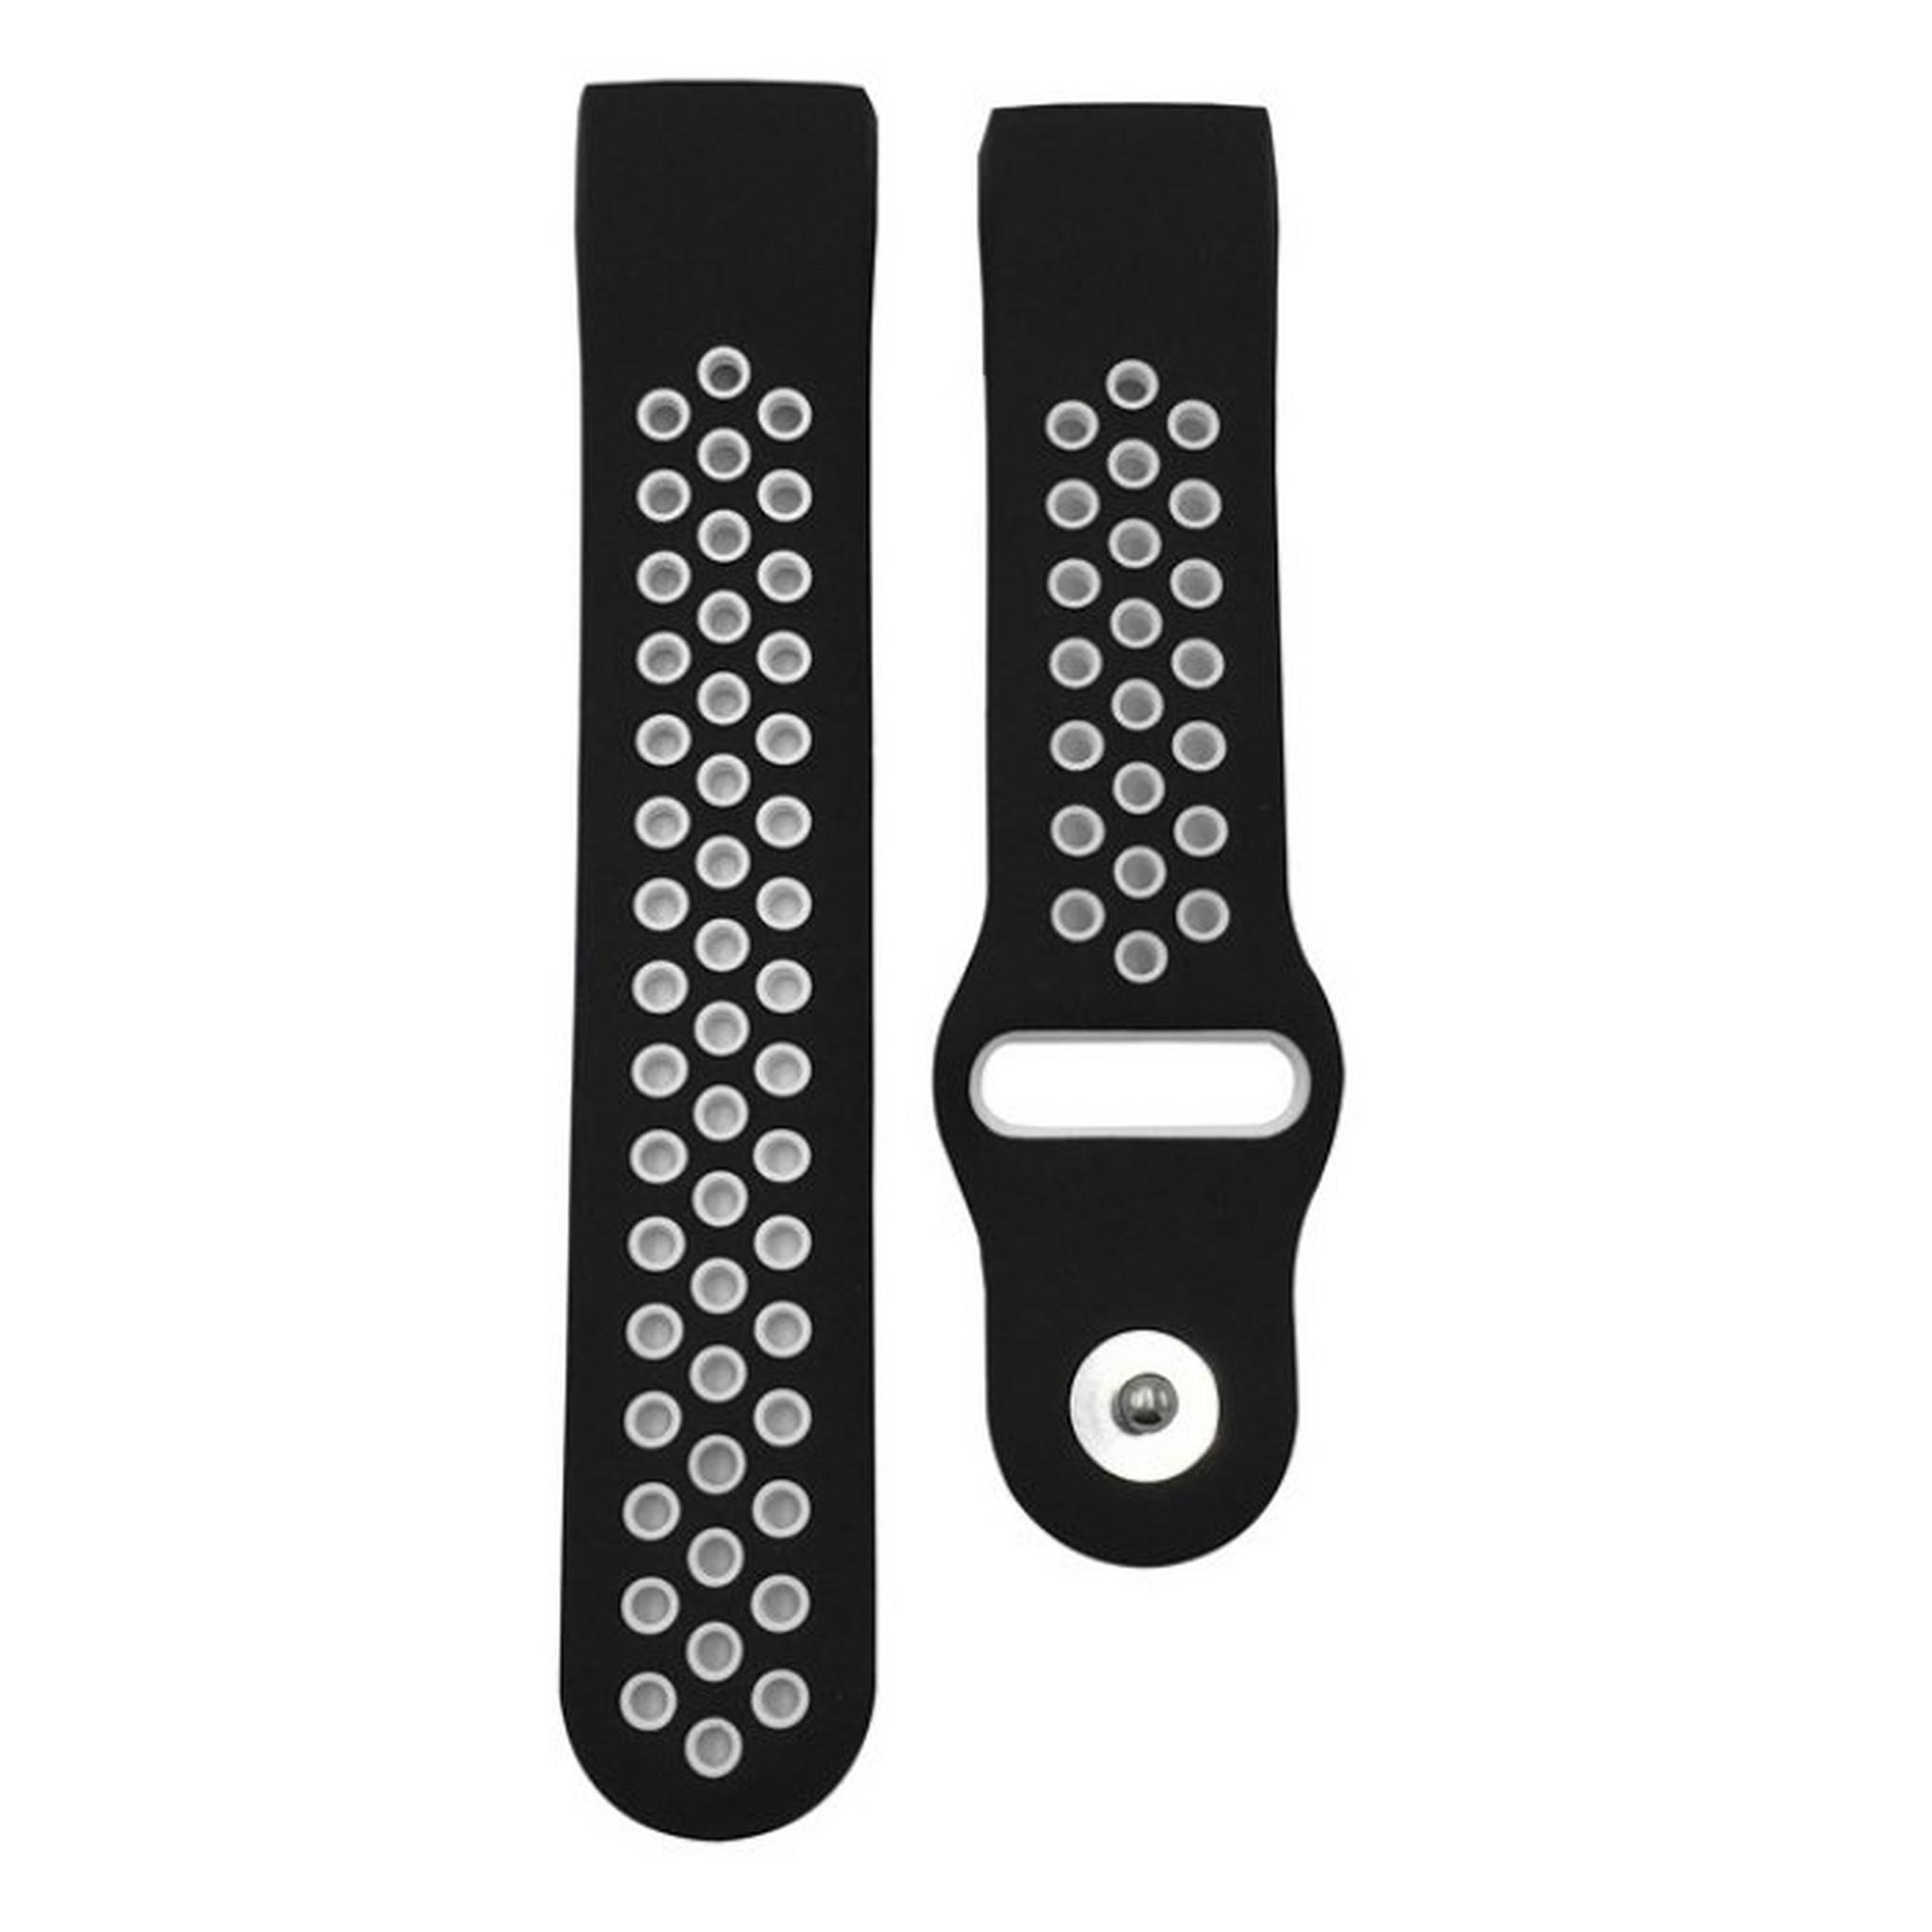 EQ 22mm Silicone Watch Band - Black/White